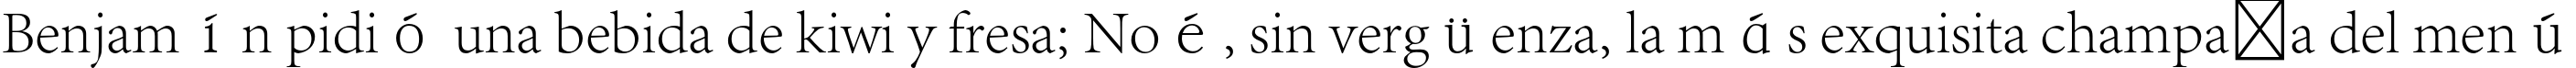 Пример написания шрифтом Adobe Song Std L текста на испанском